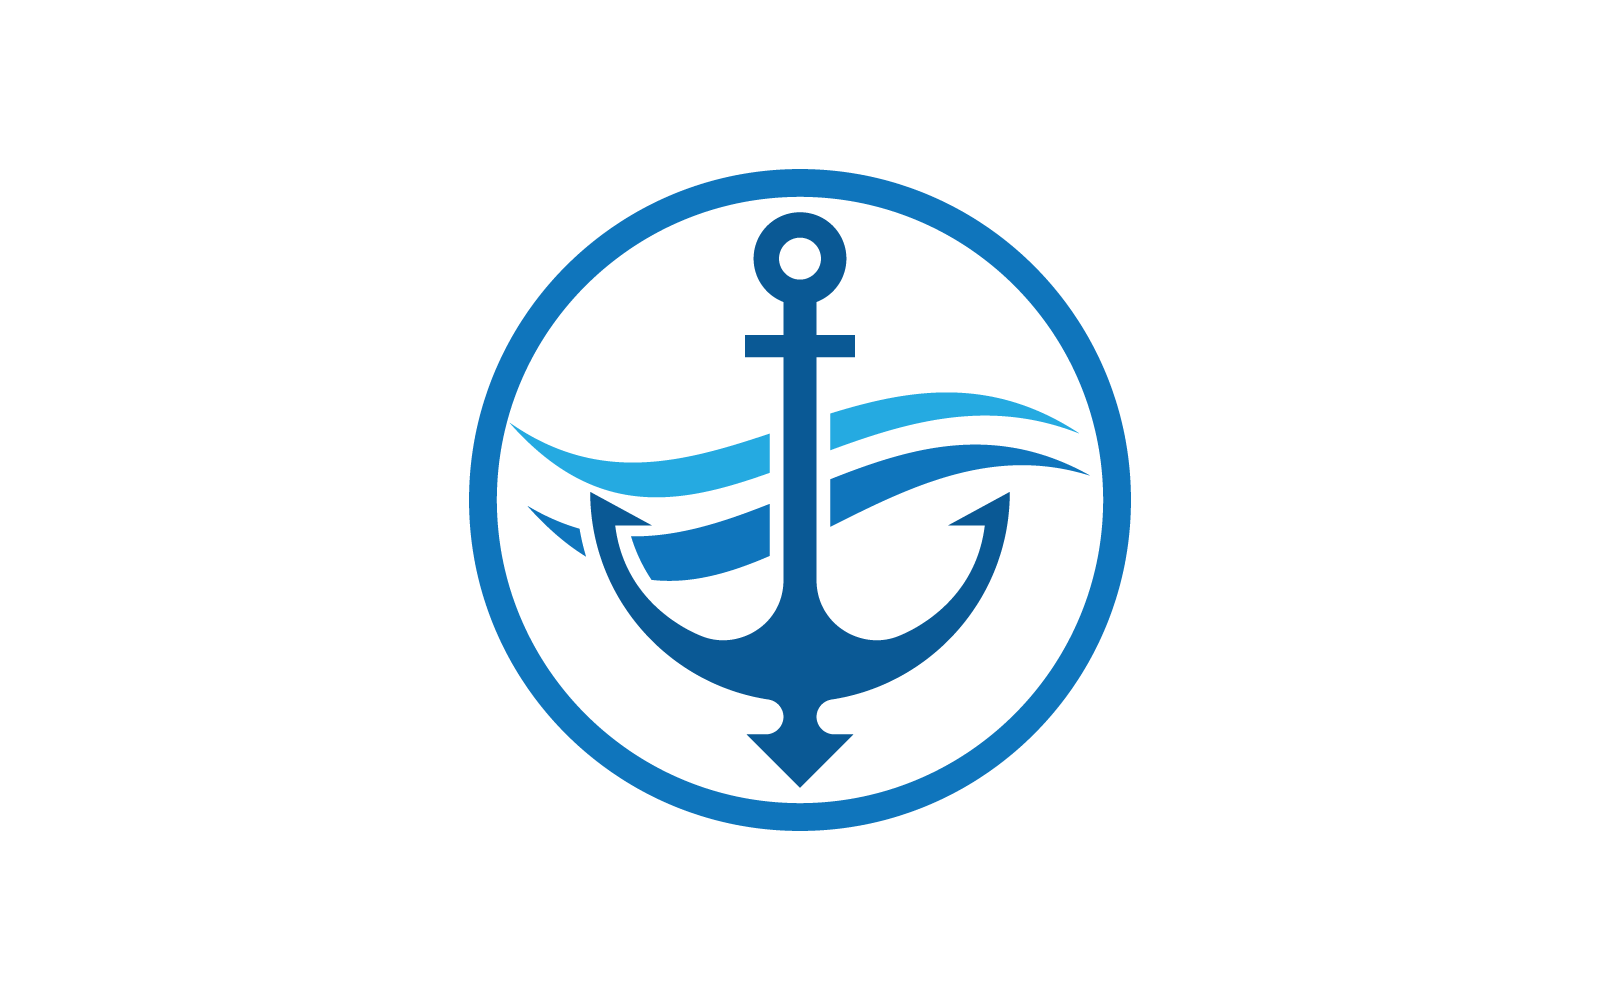 Иллюстрация логотипа якоря